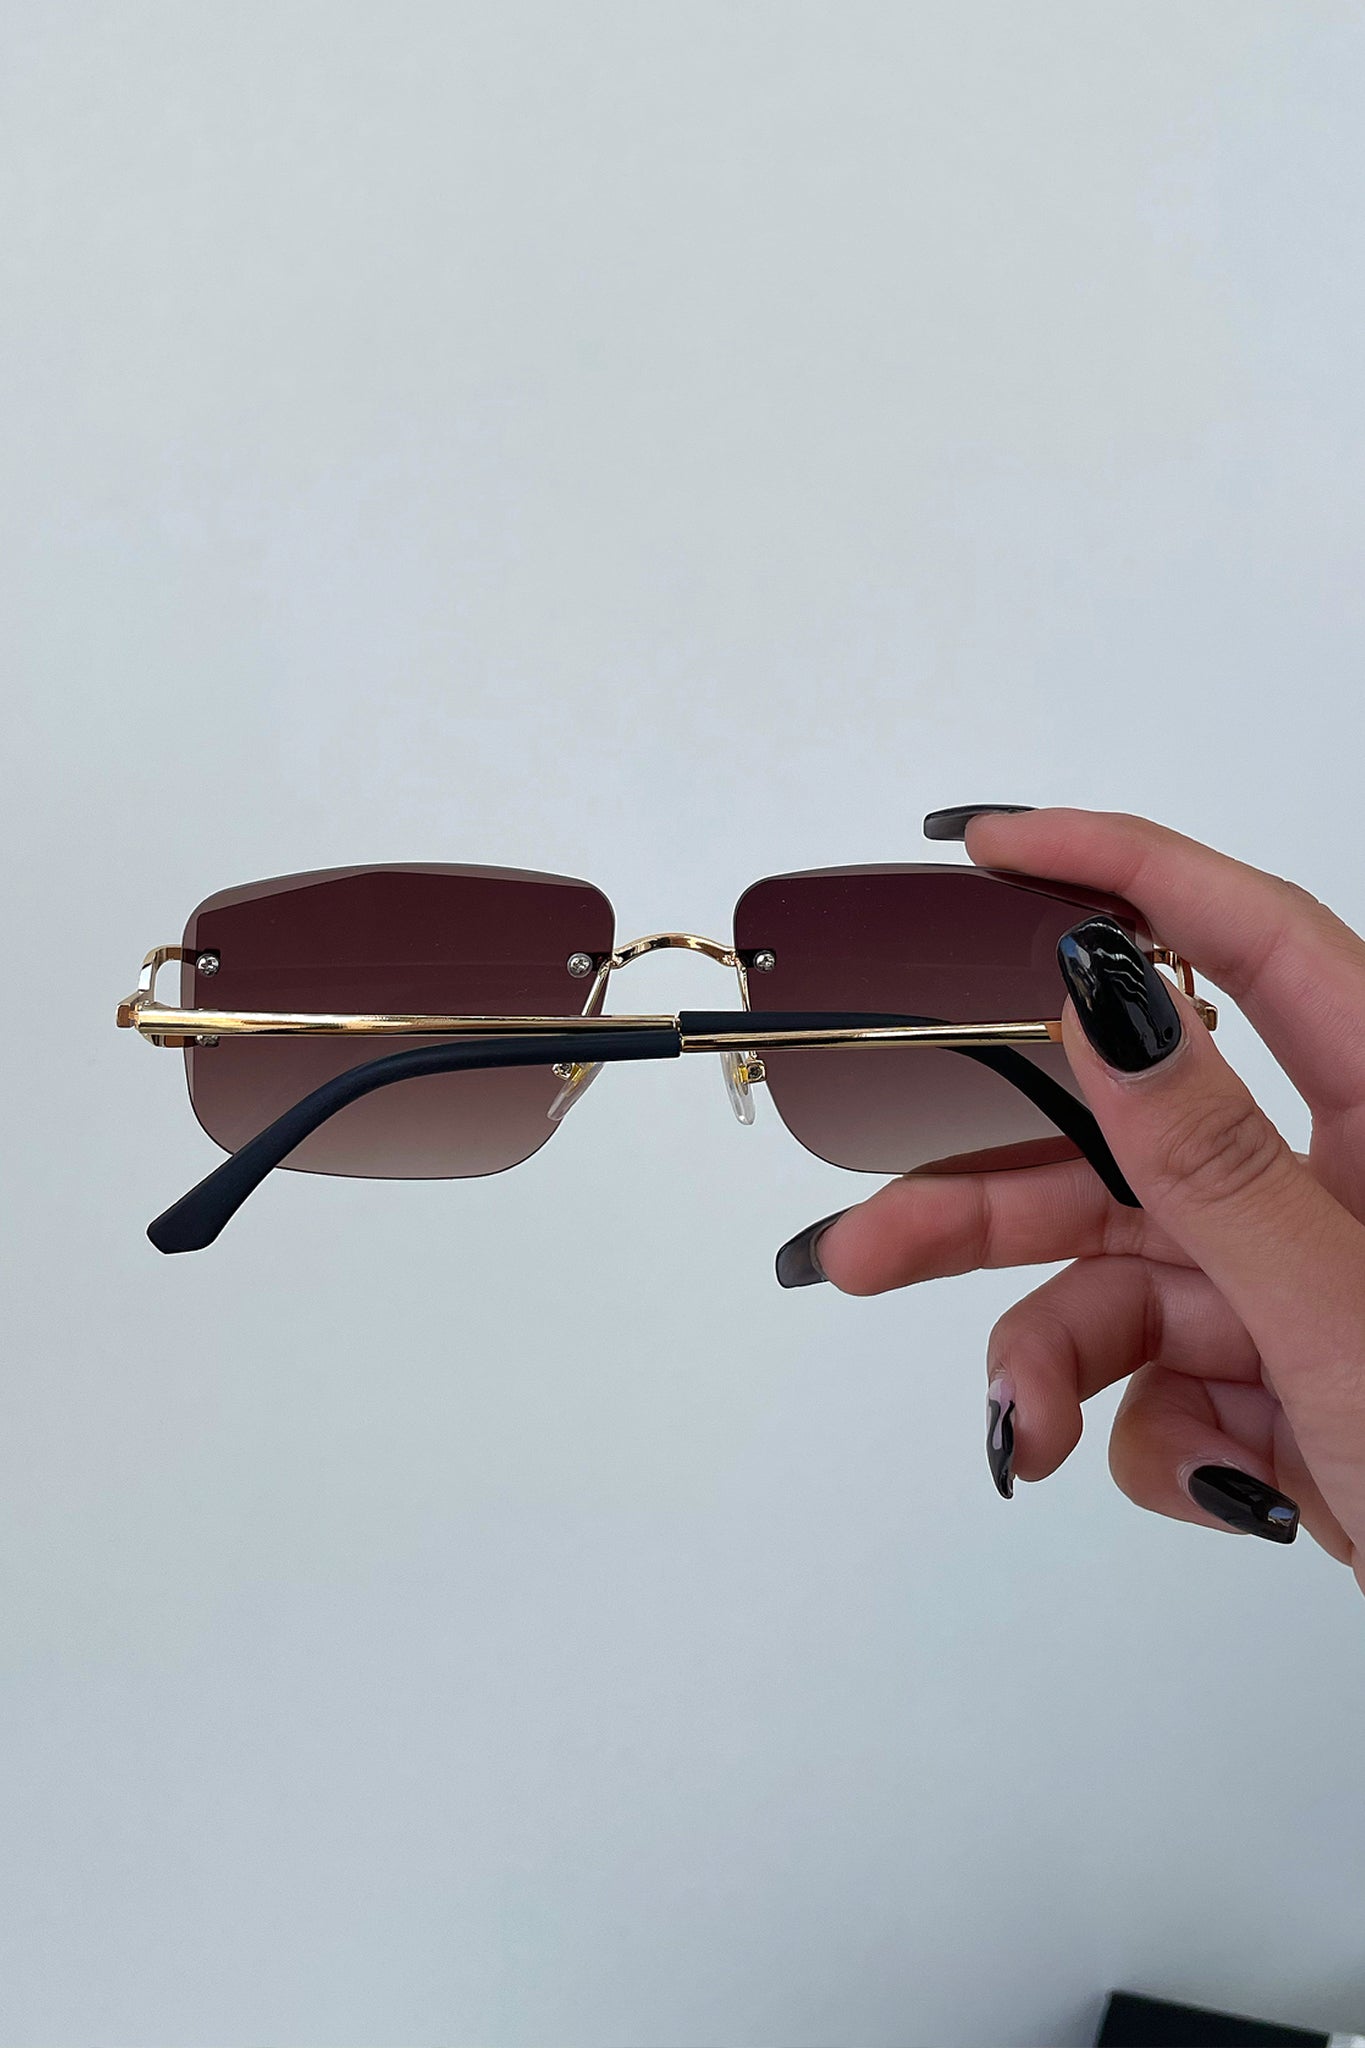 Essex Sunglasses - Brown Gradient